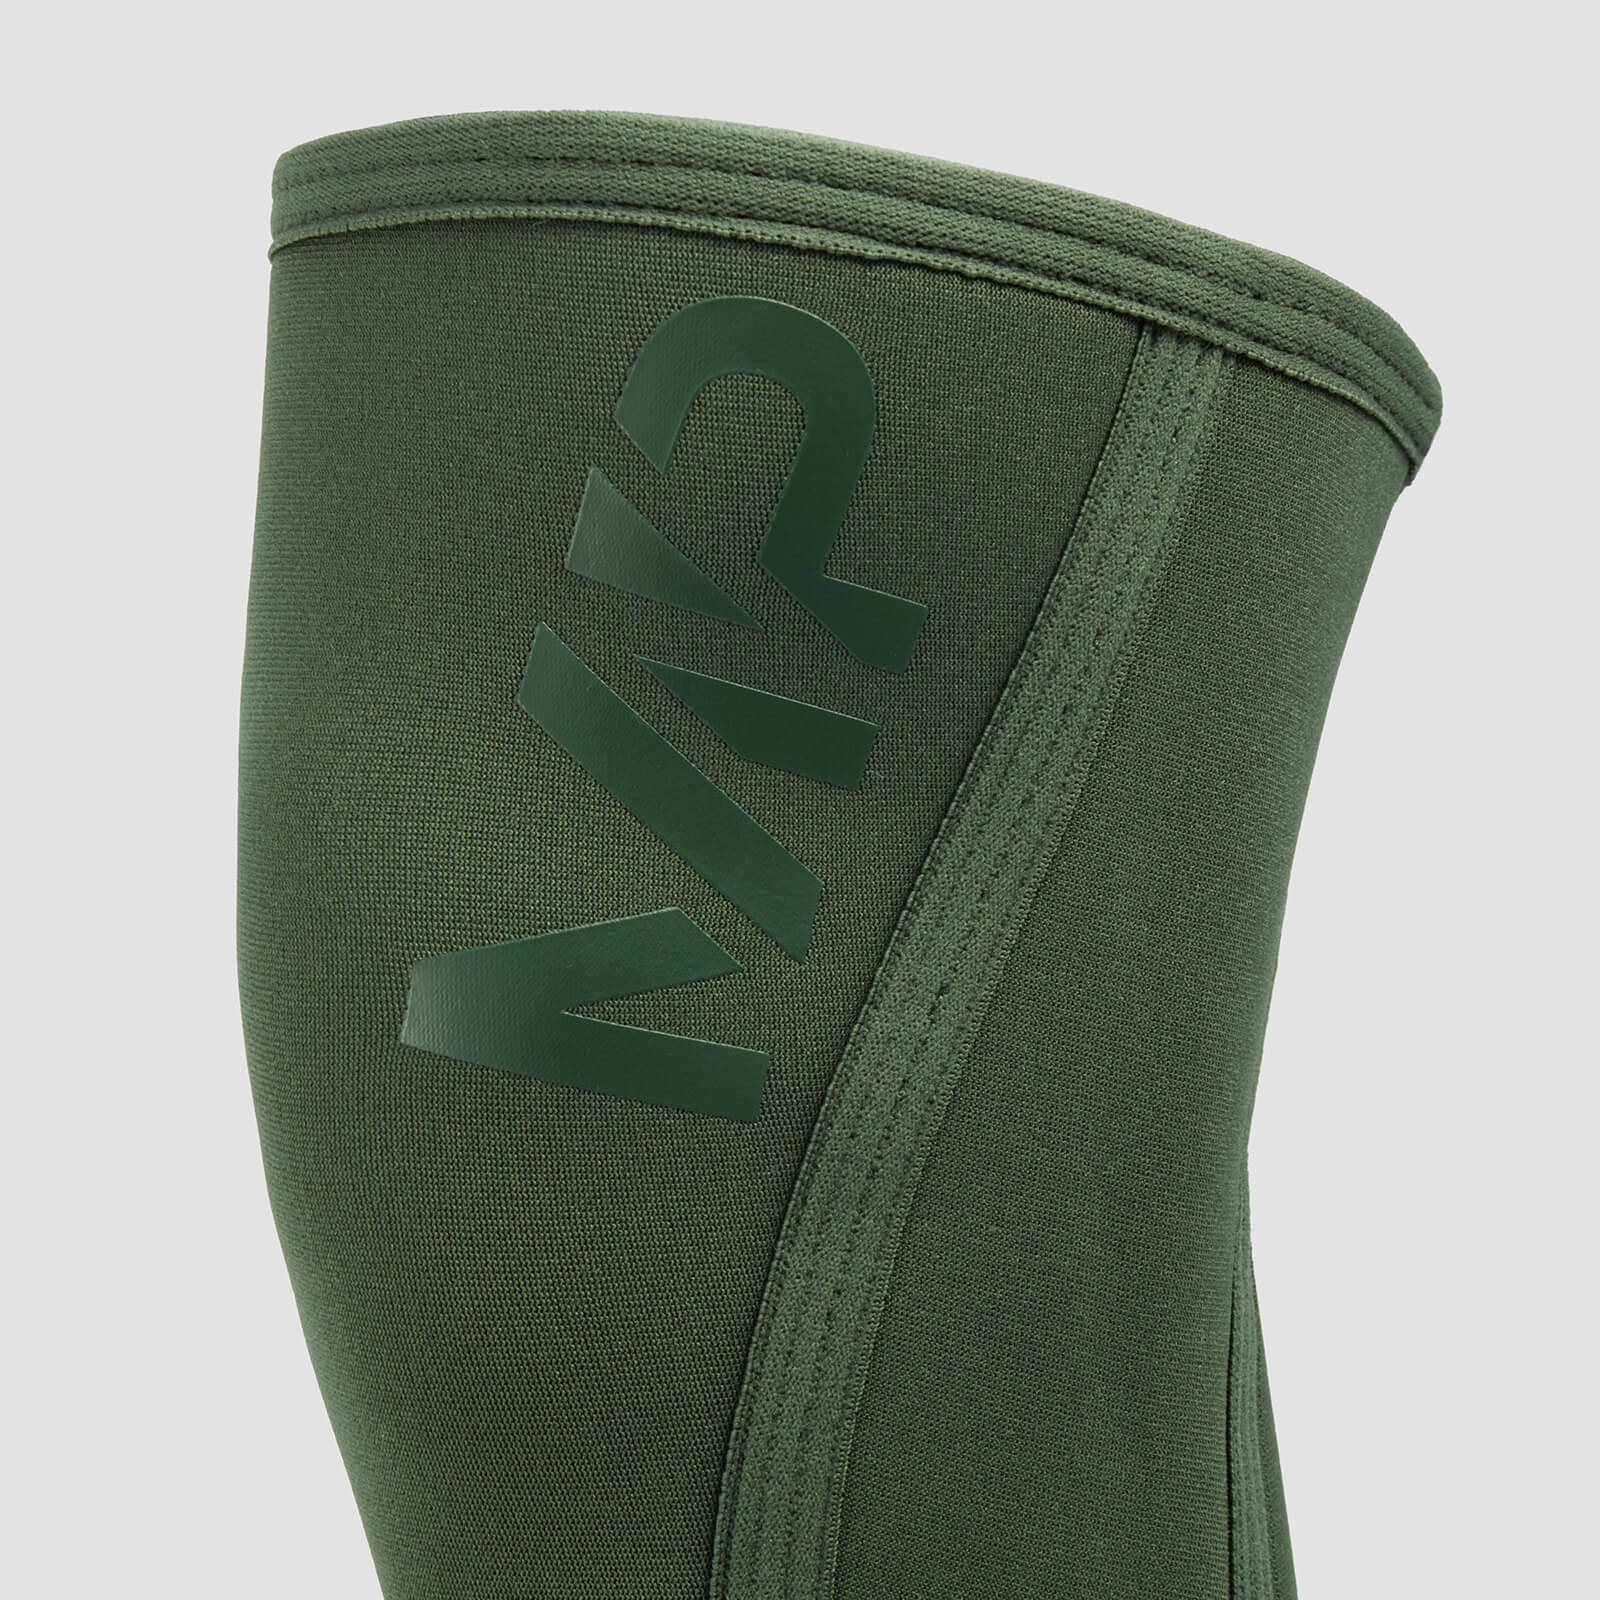 mp unisex training knee sleeve pair - dark green - m